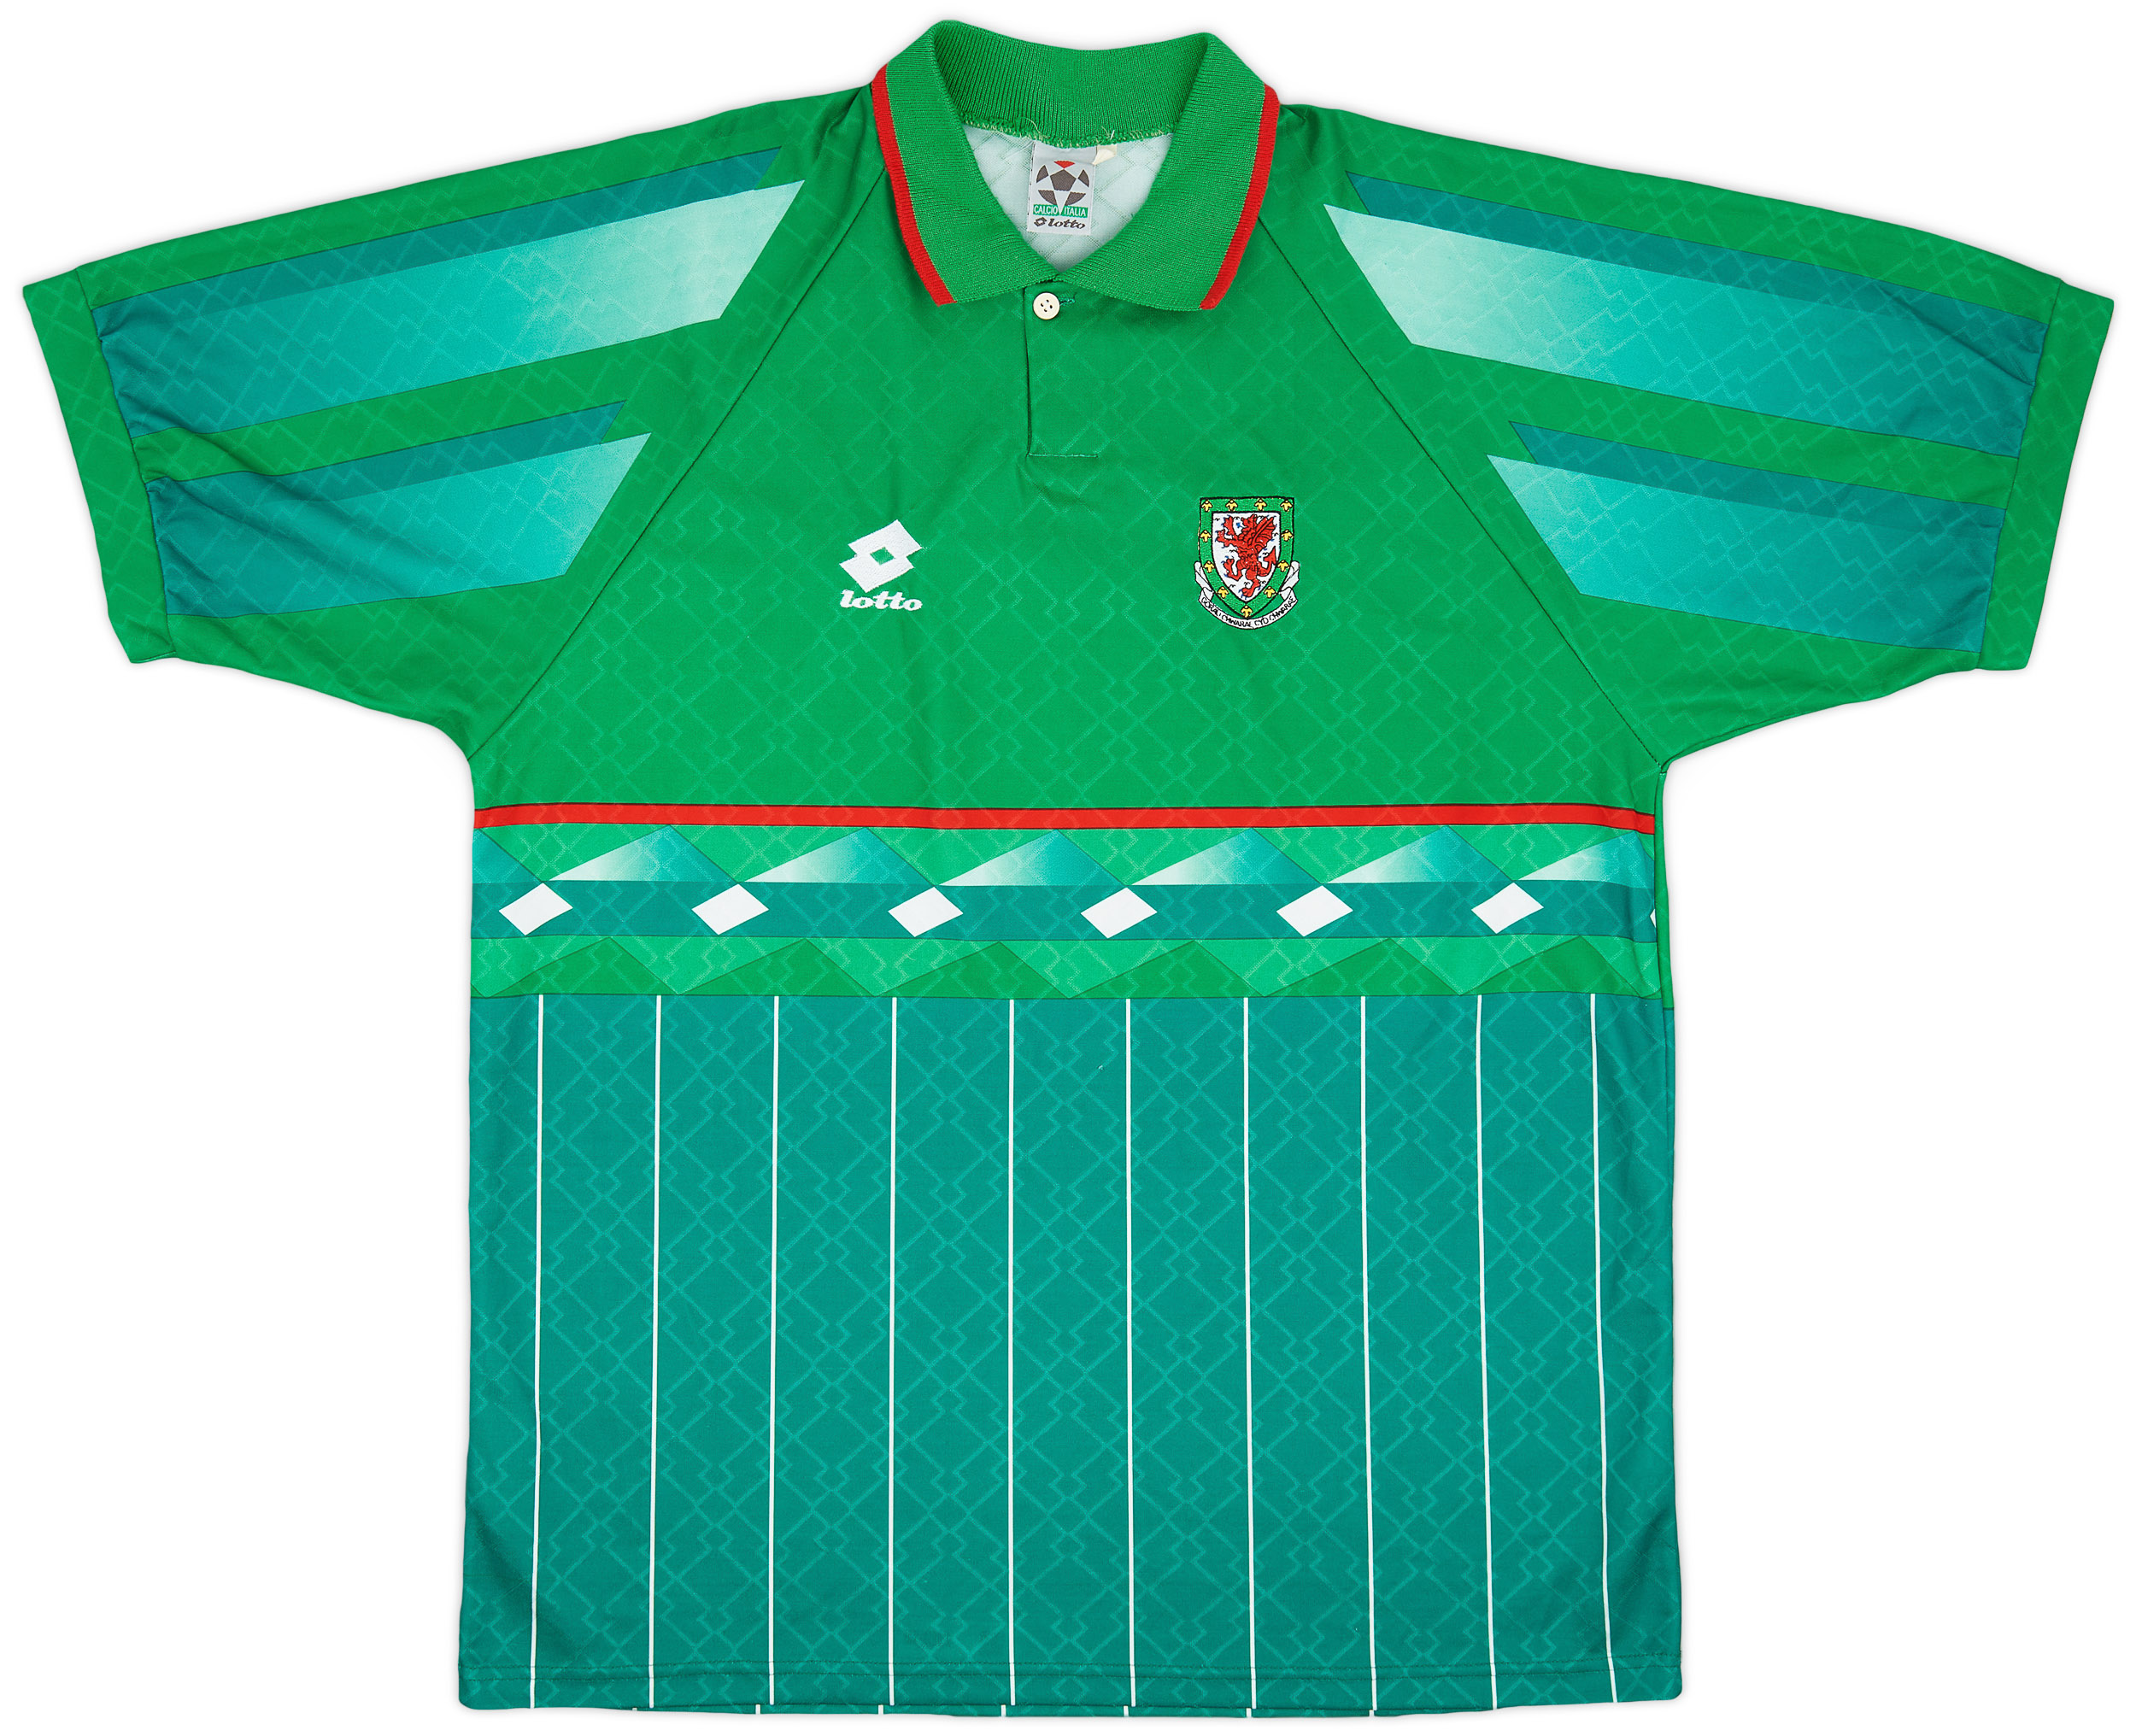 1996 Wales Away Shirt - 9/10 - ()